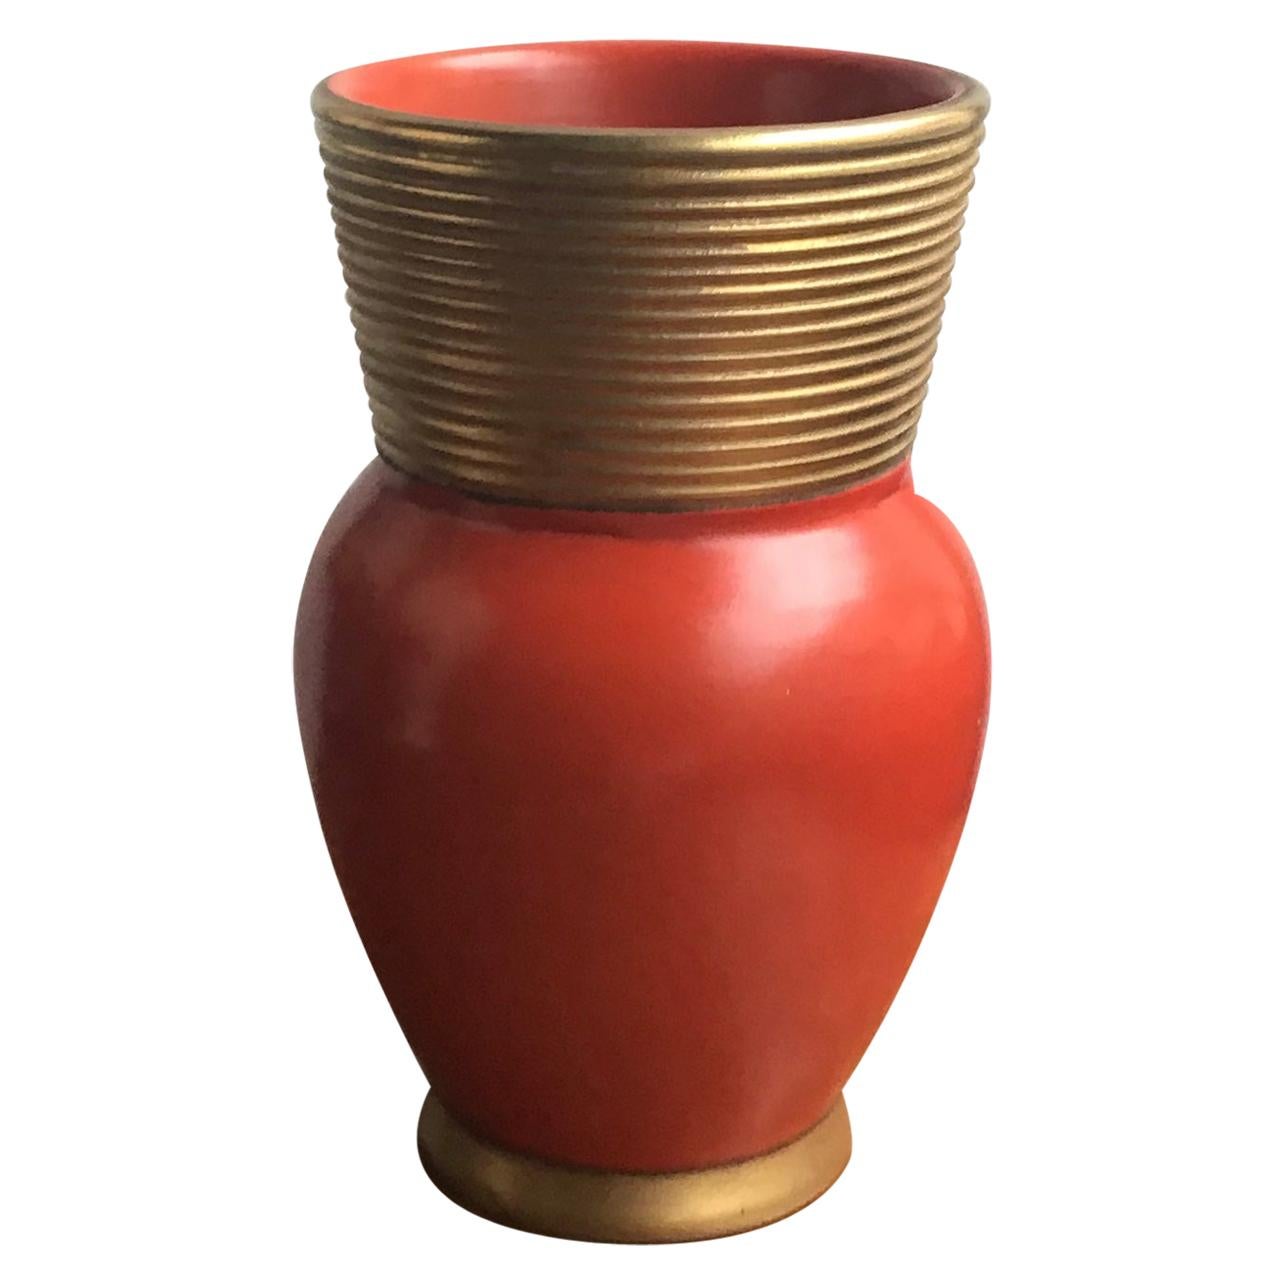 Gio Ponti Richard Ginori Vase Ceramic Gold Red, 1940, Italy For Sale